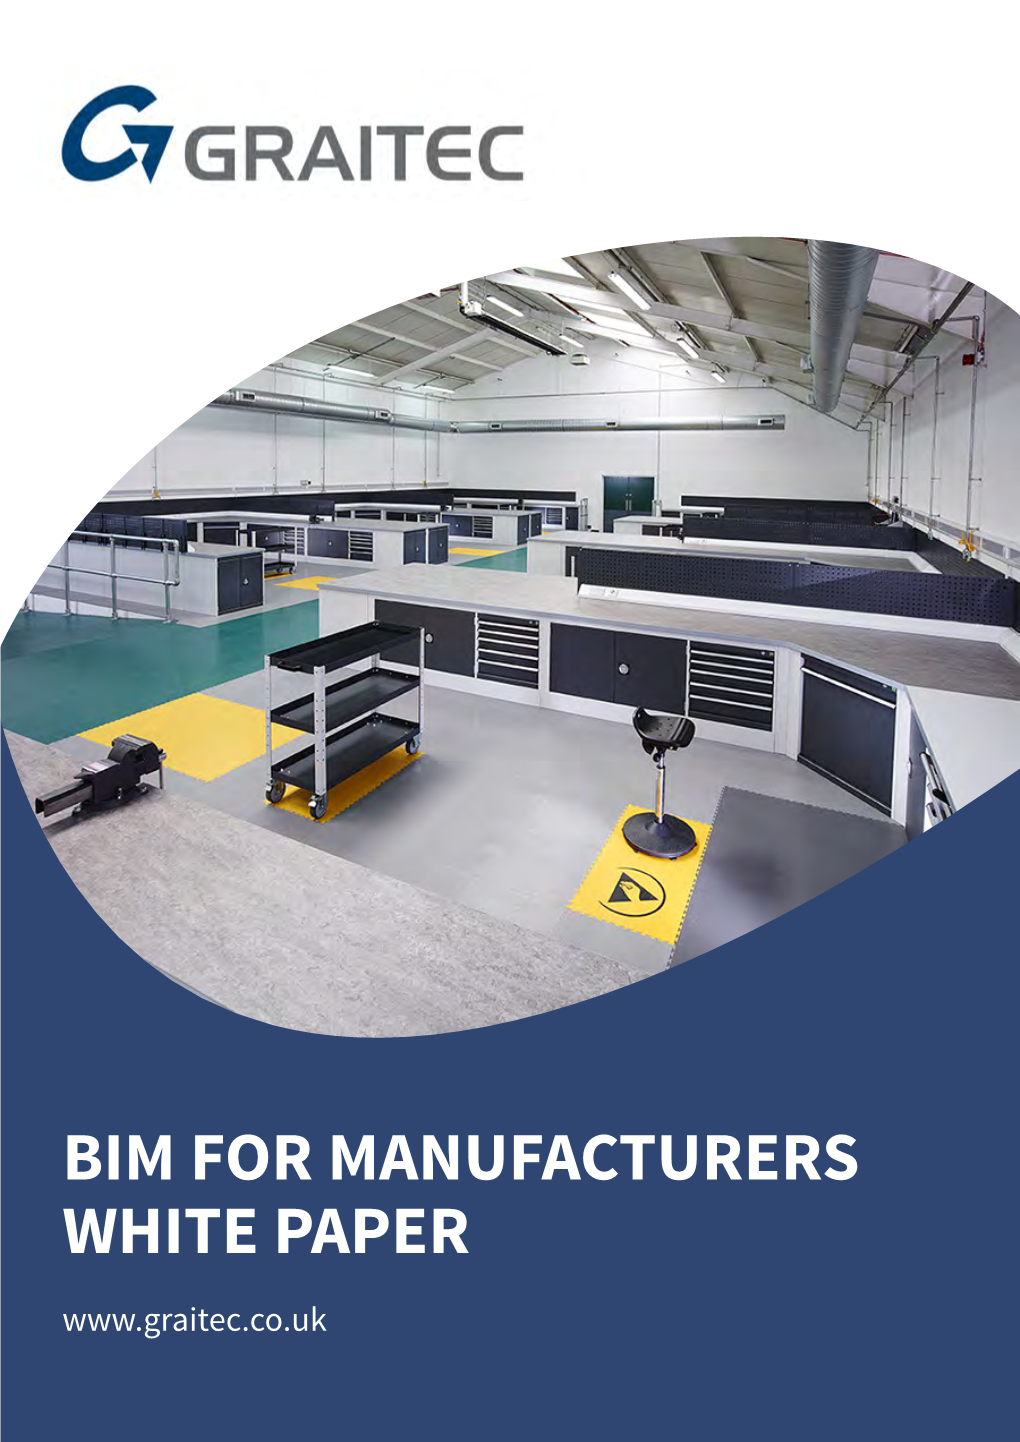 Bim for Manufacturers White Paper